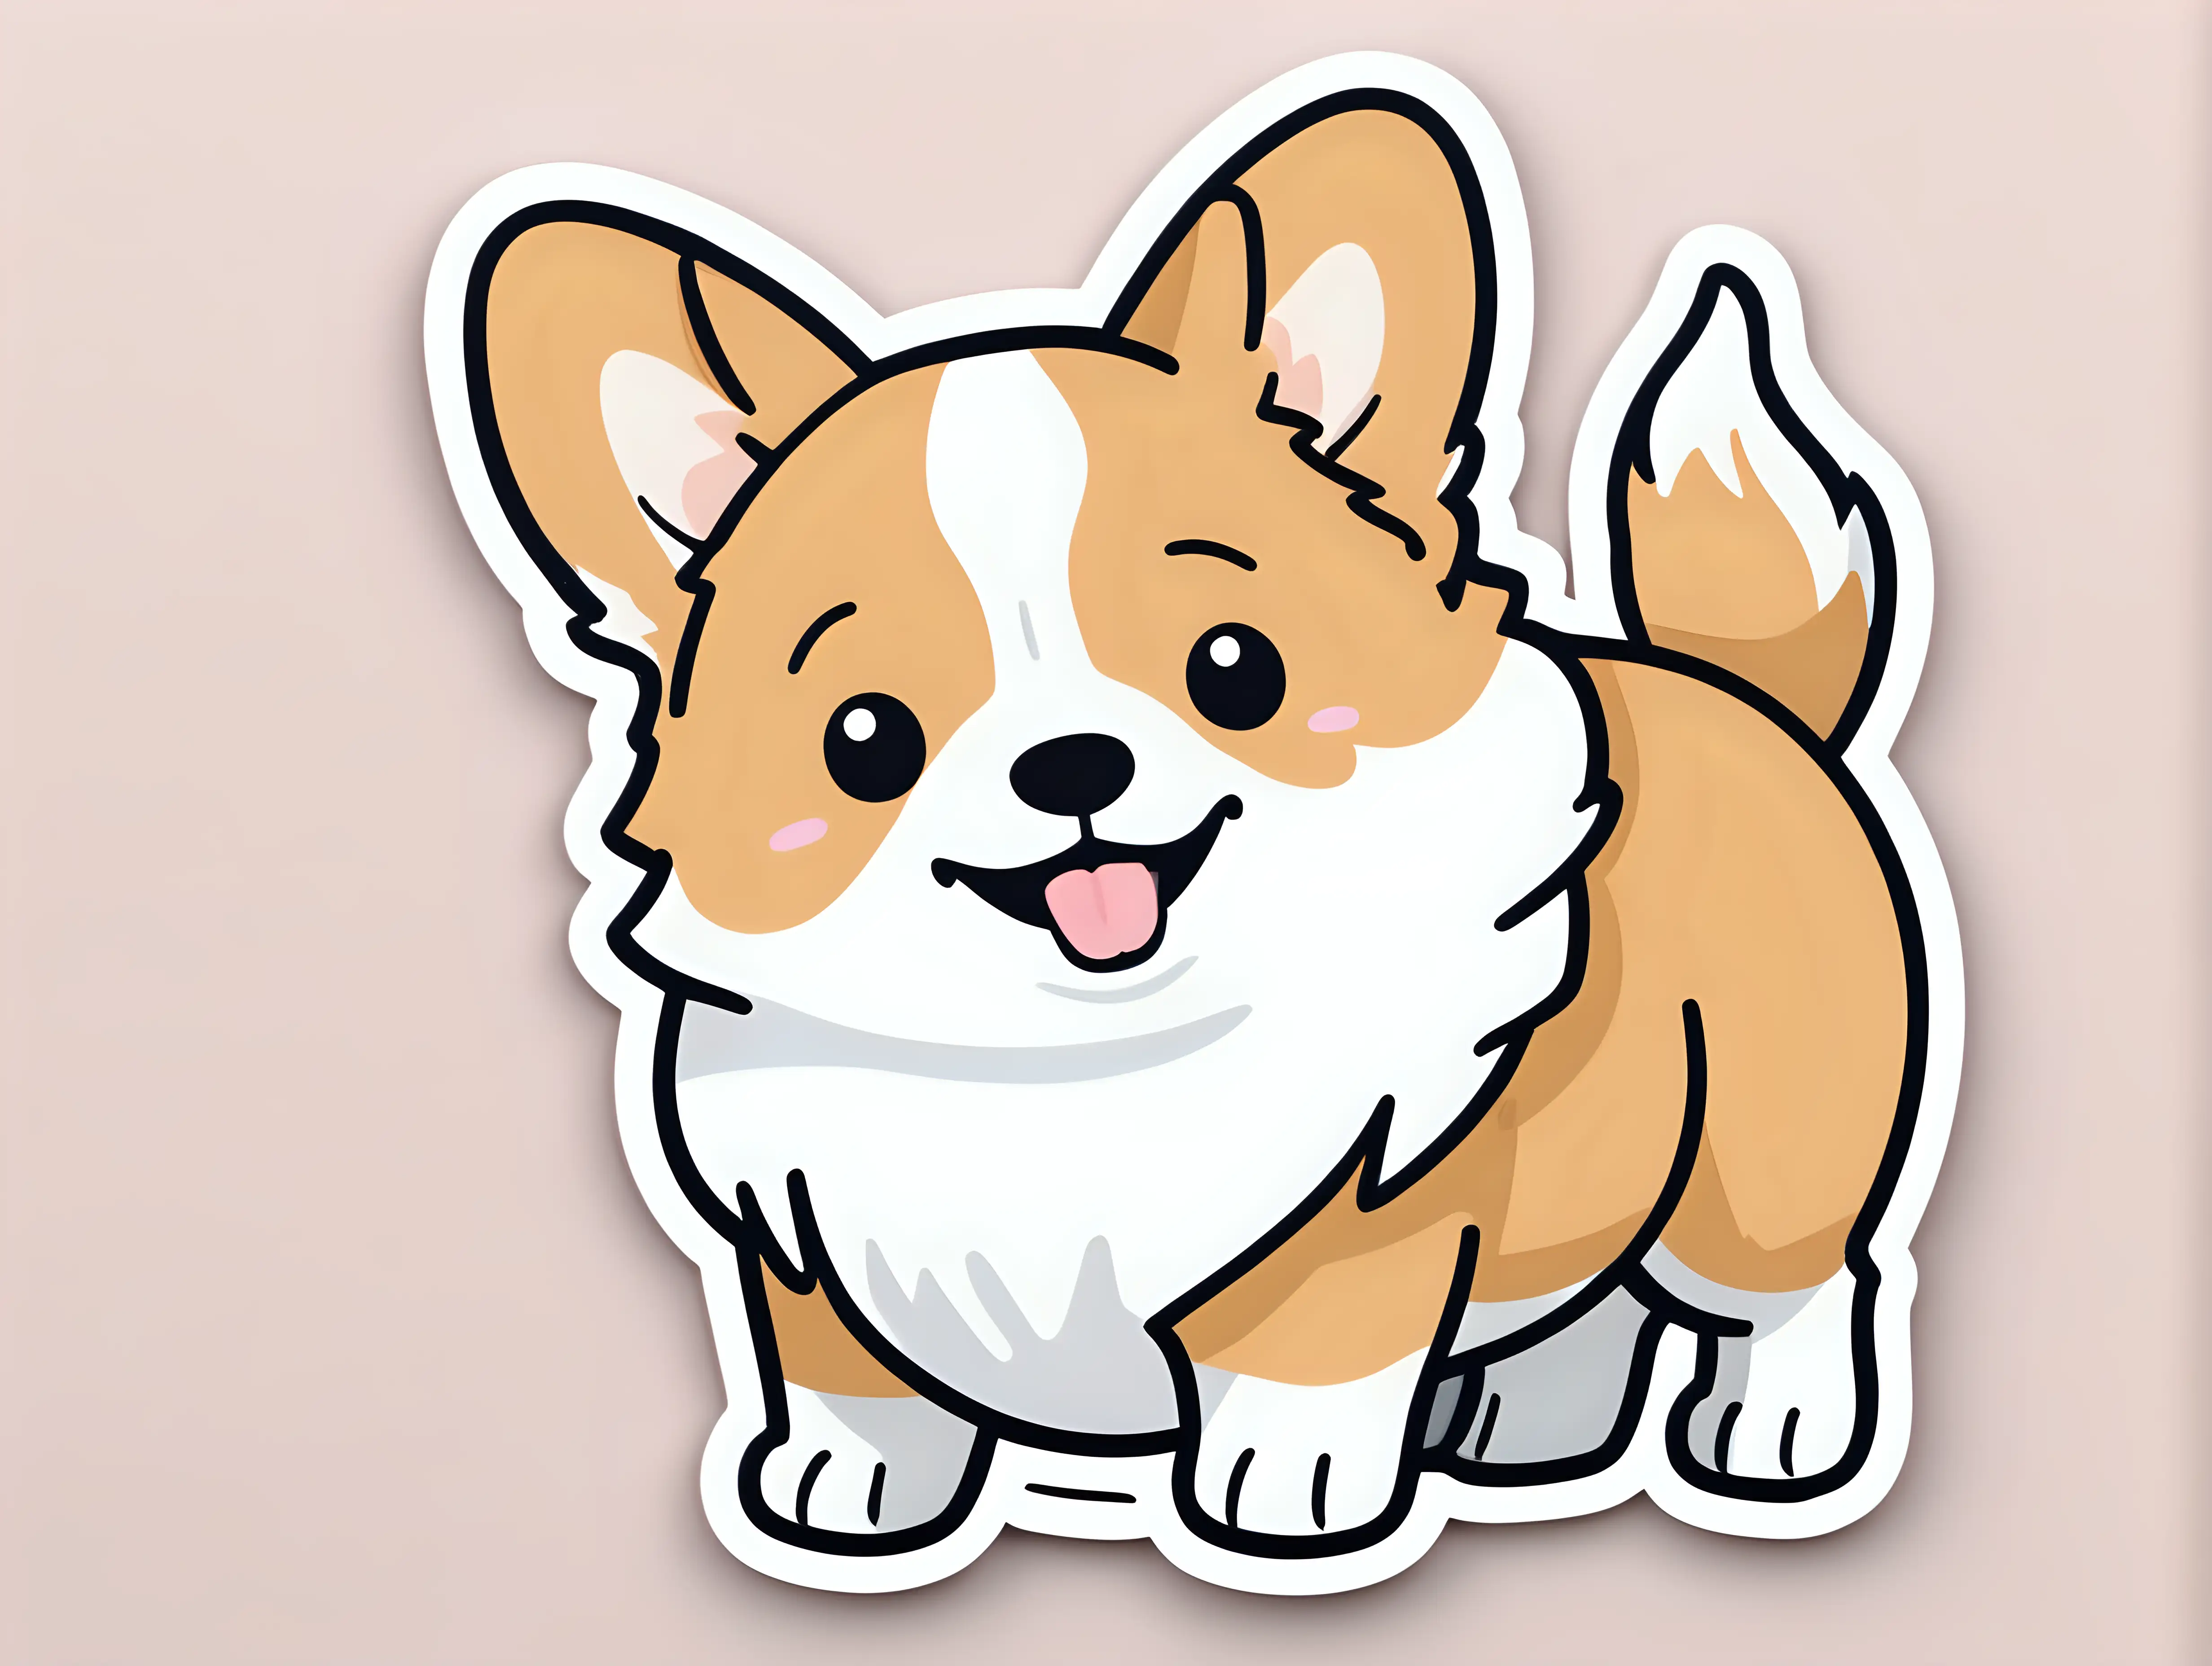 Adorable Corgi Sticker Charming Canine Illustration for Pet Lovers